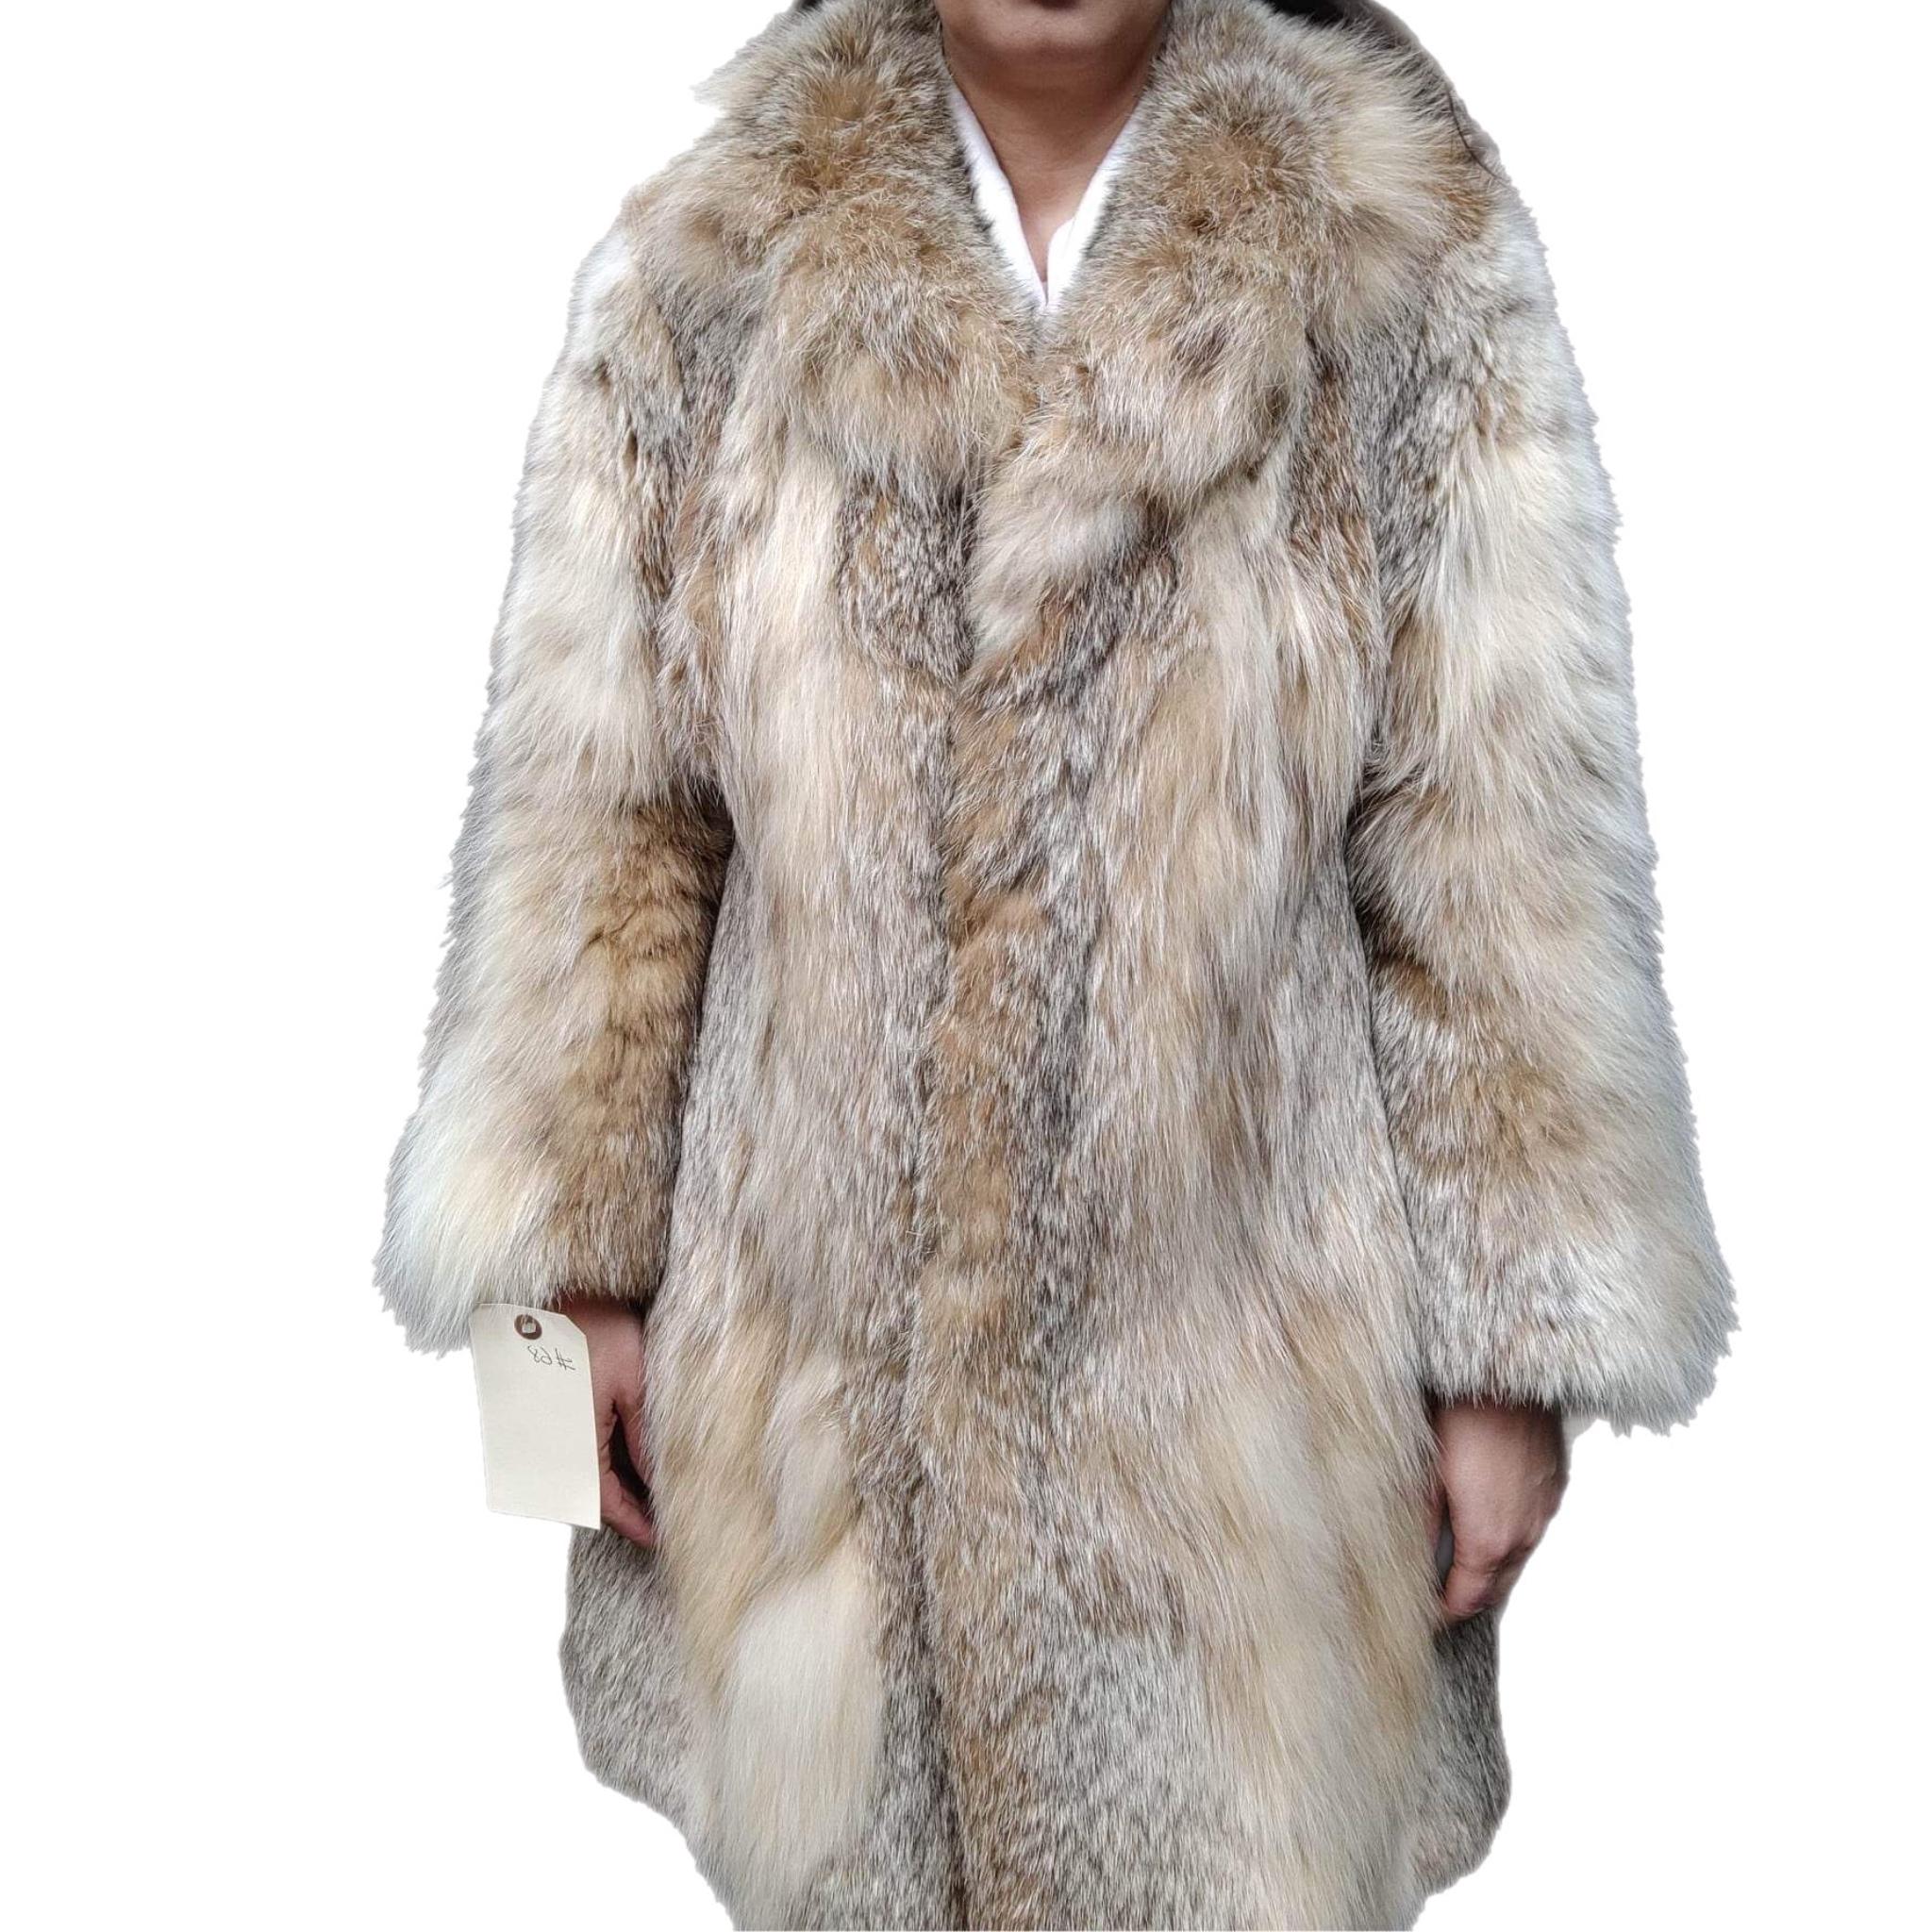 Brand new lightweight lynx fur coat size 8 S 1